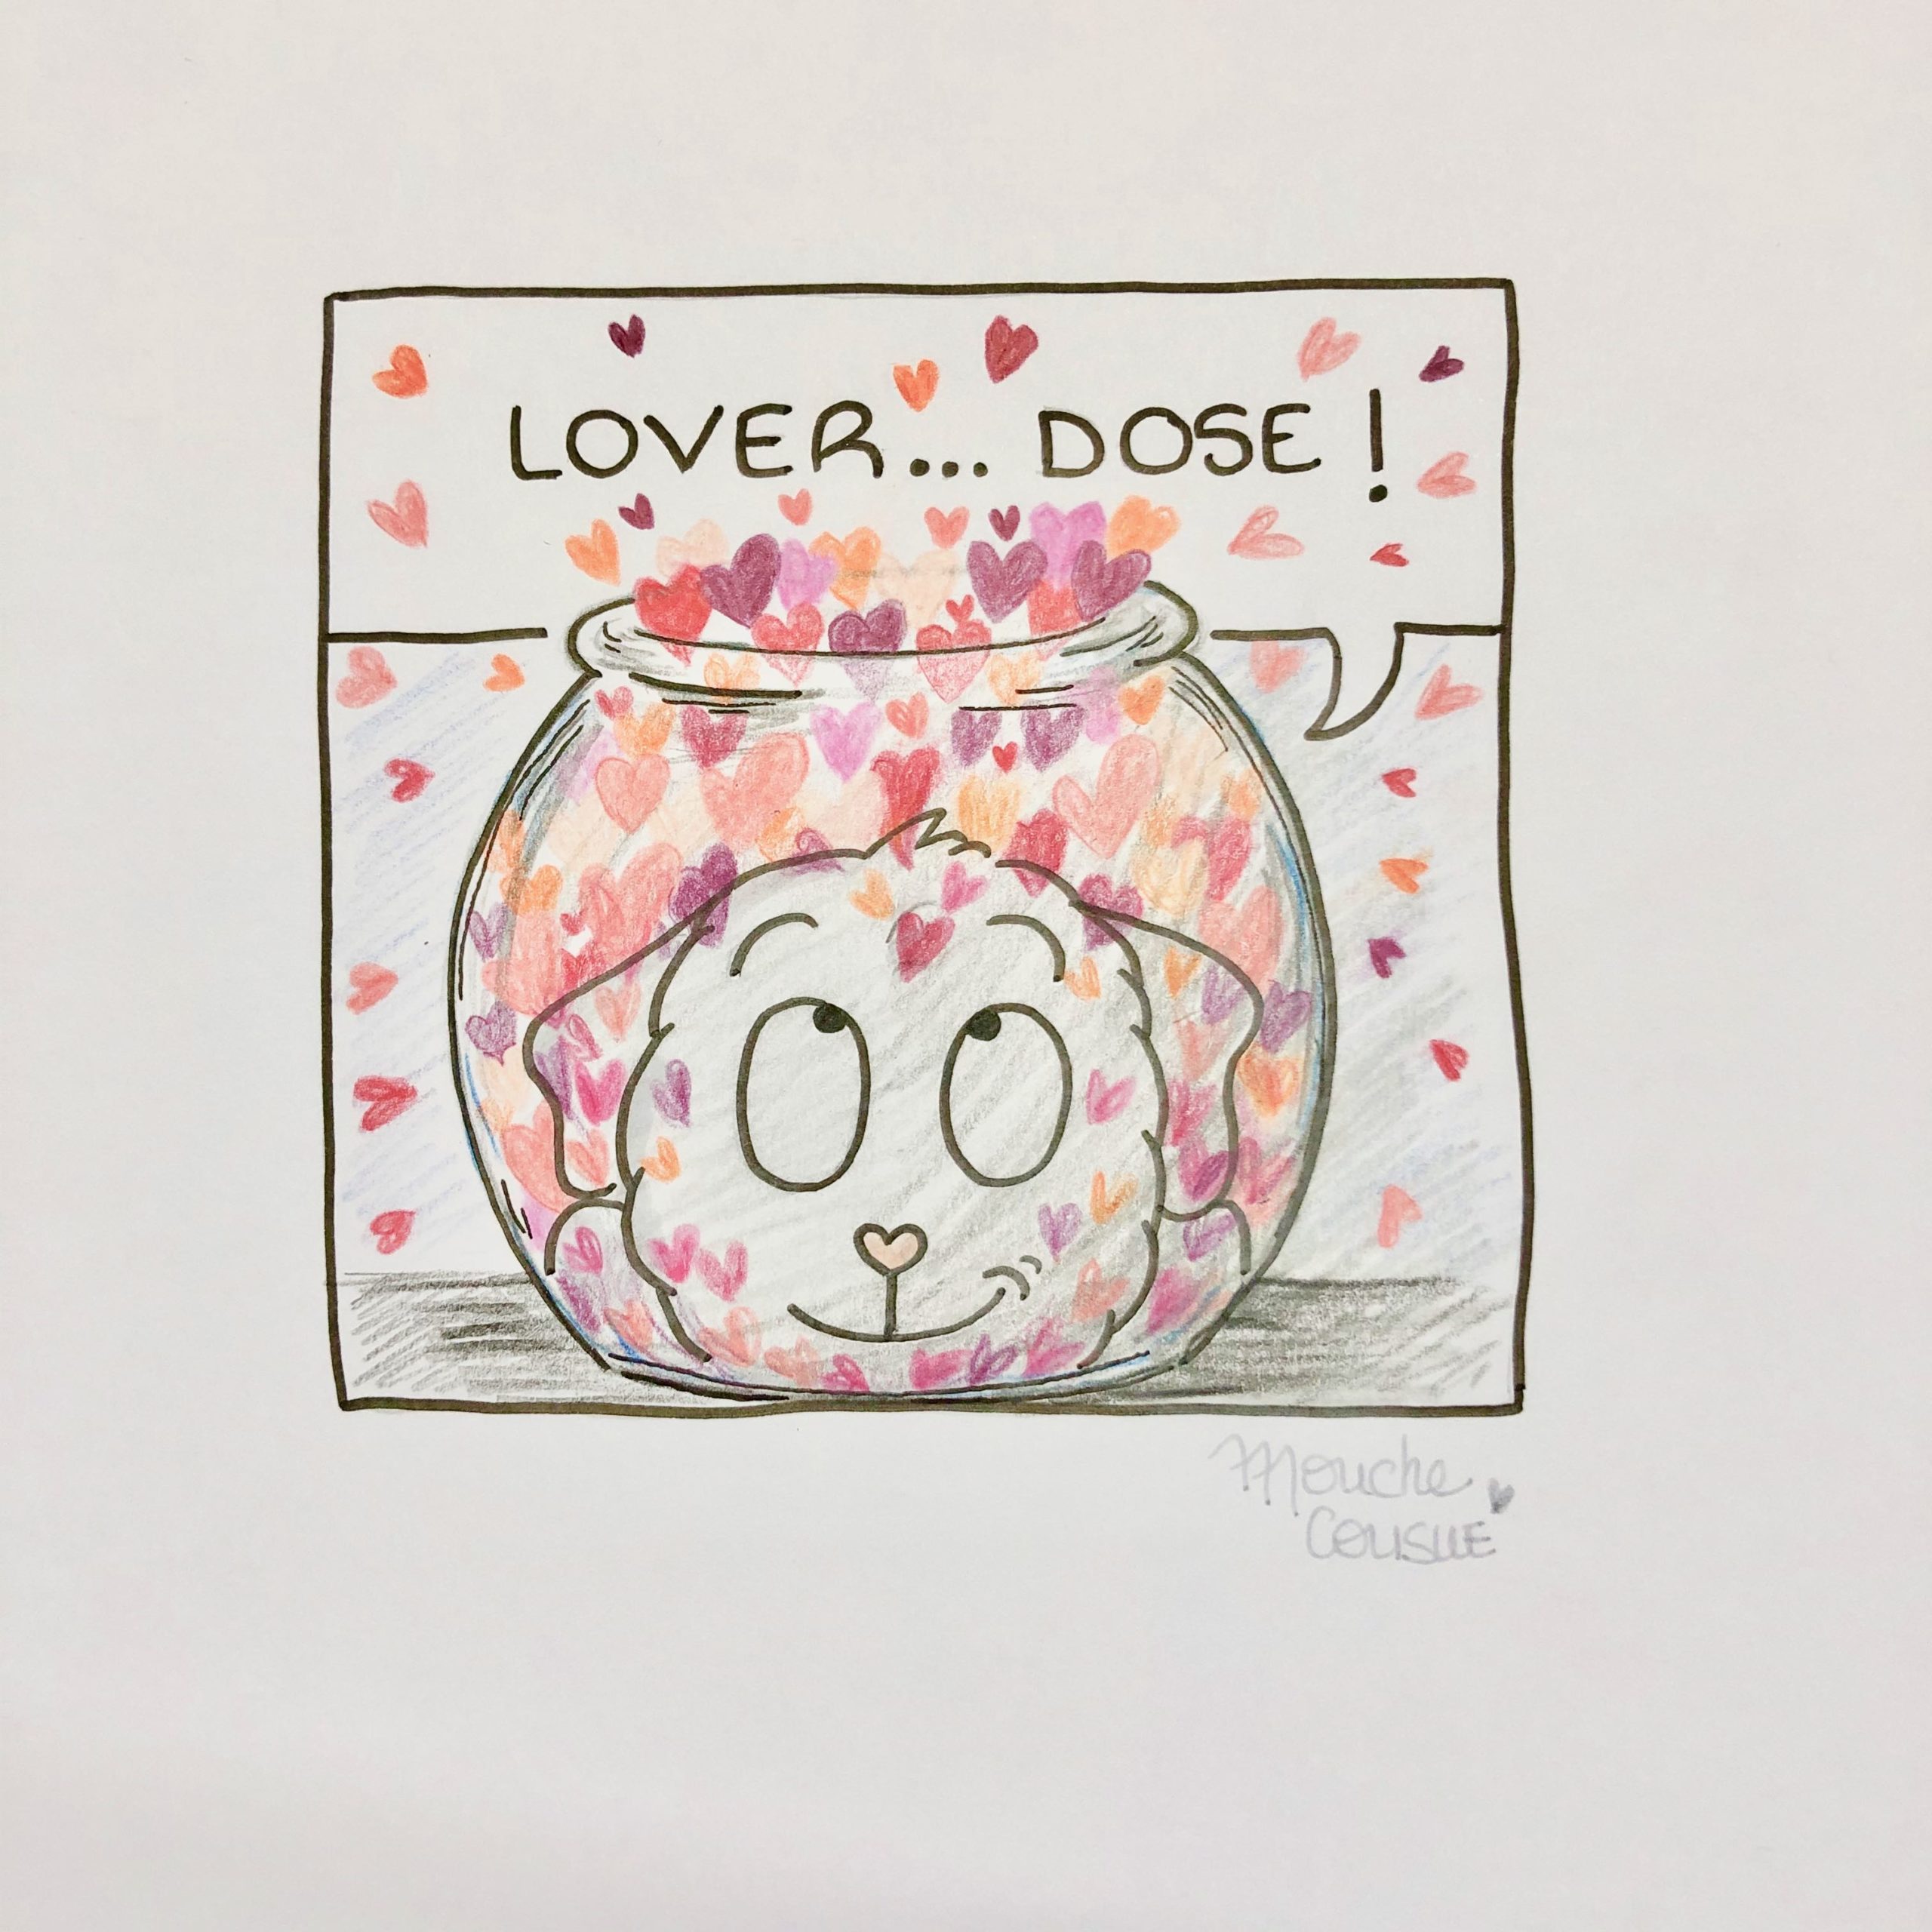 Lover… dose !